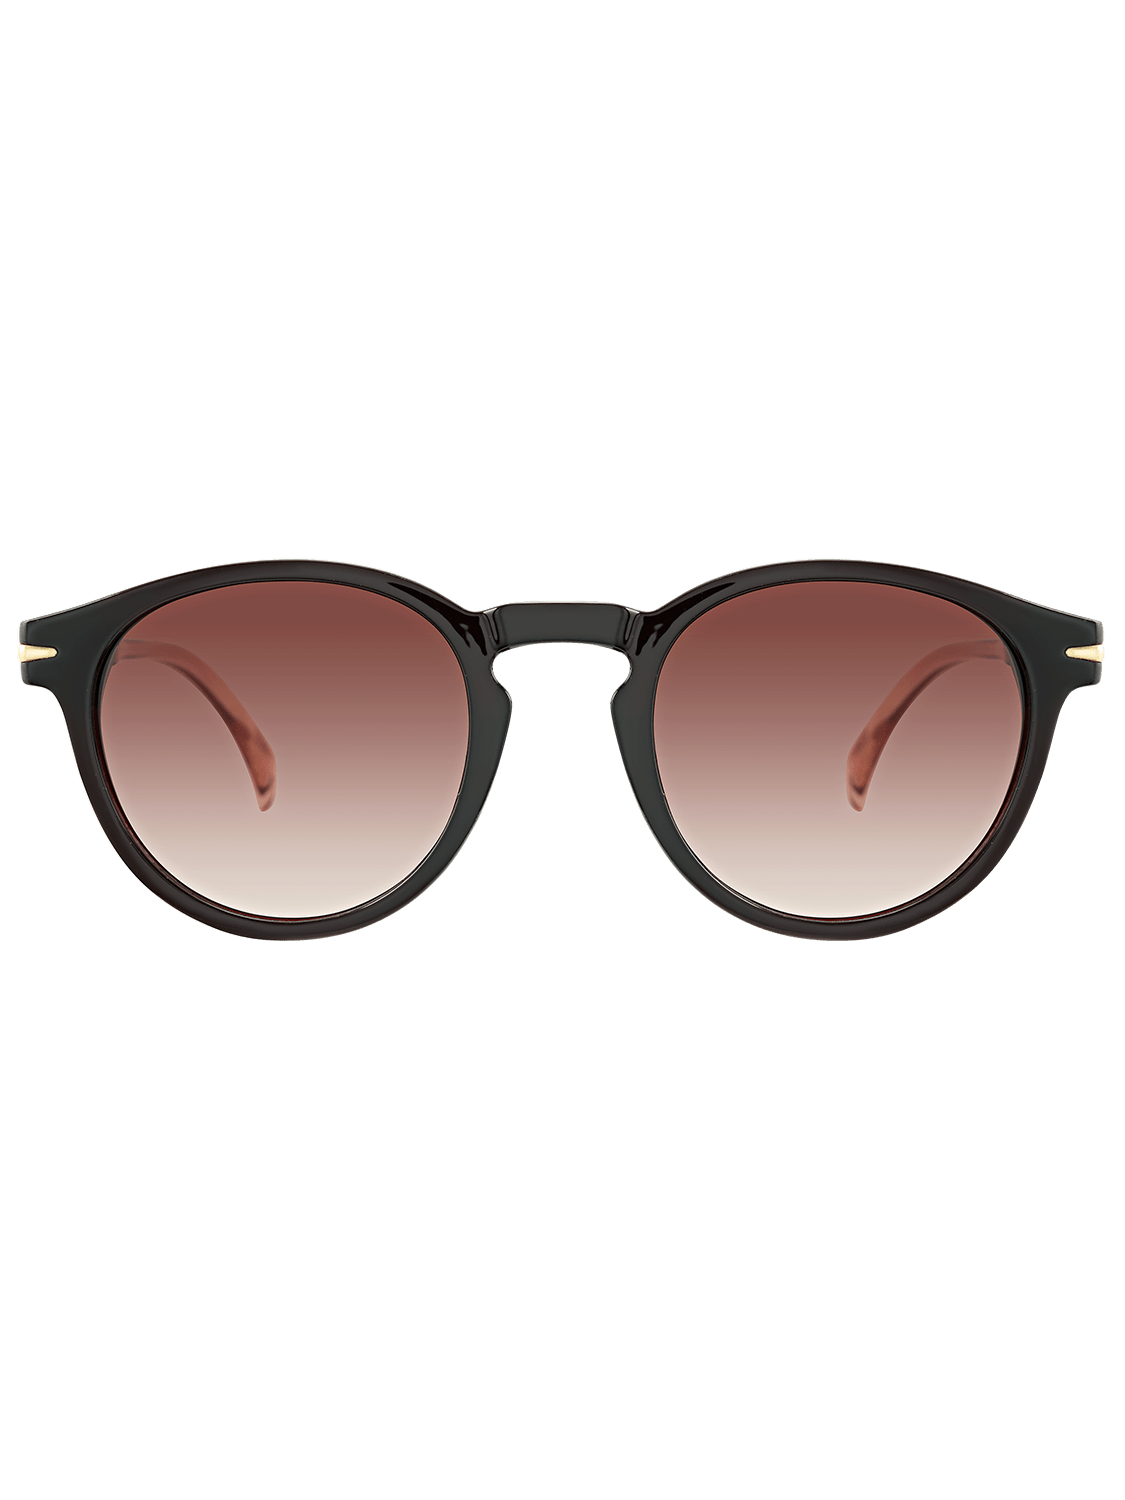 Front view of black round rim sunglasses for men